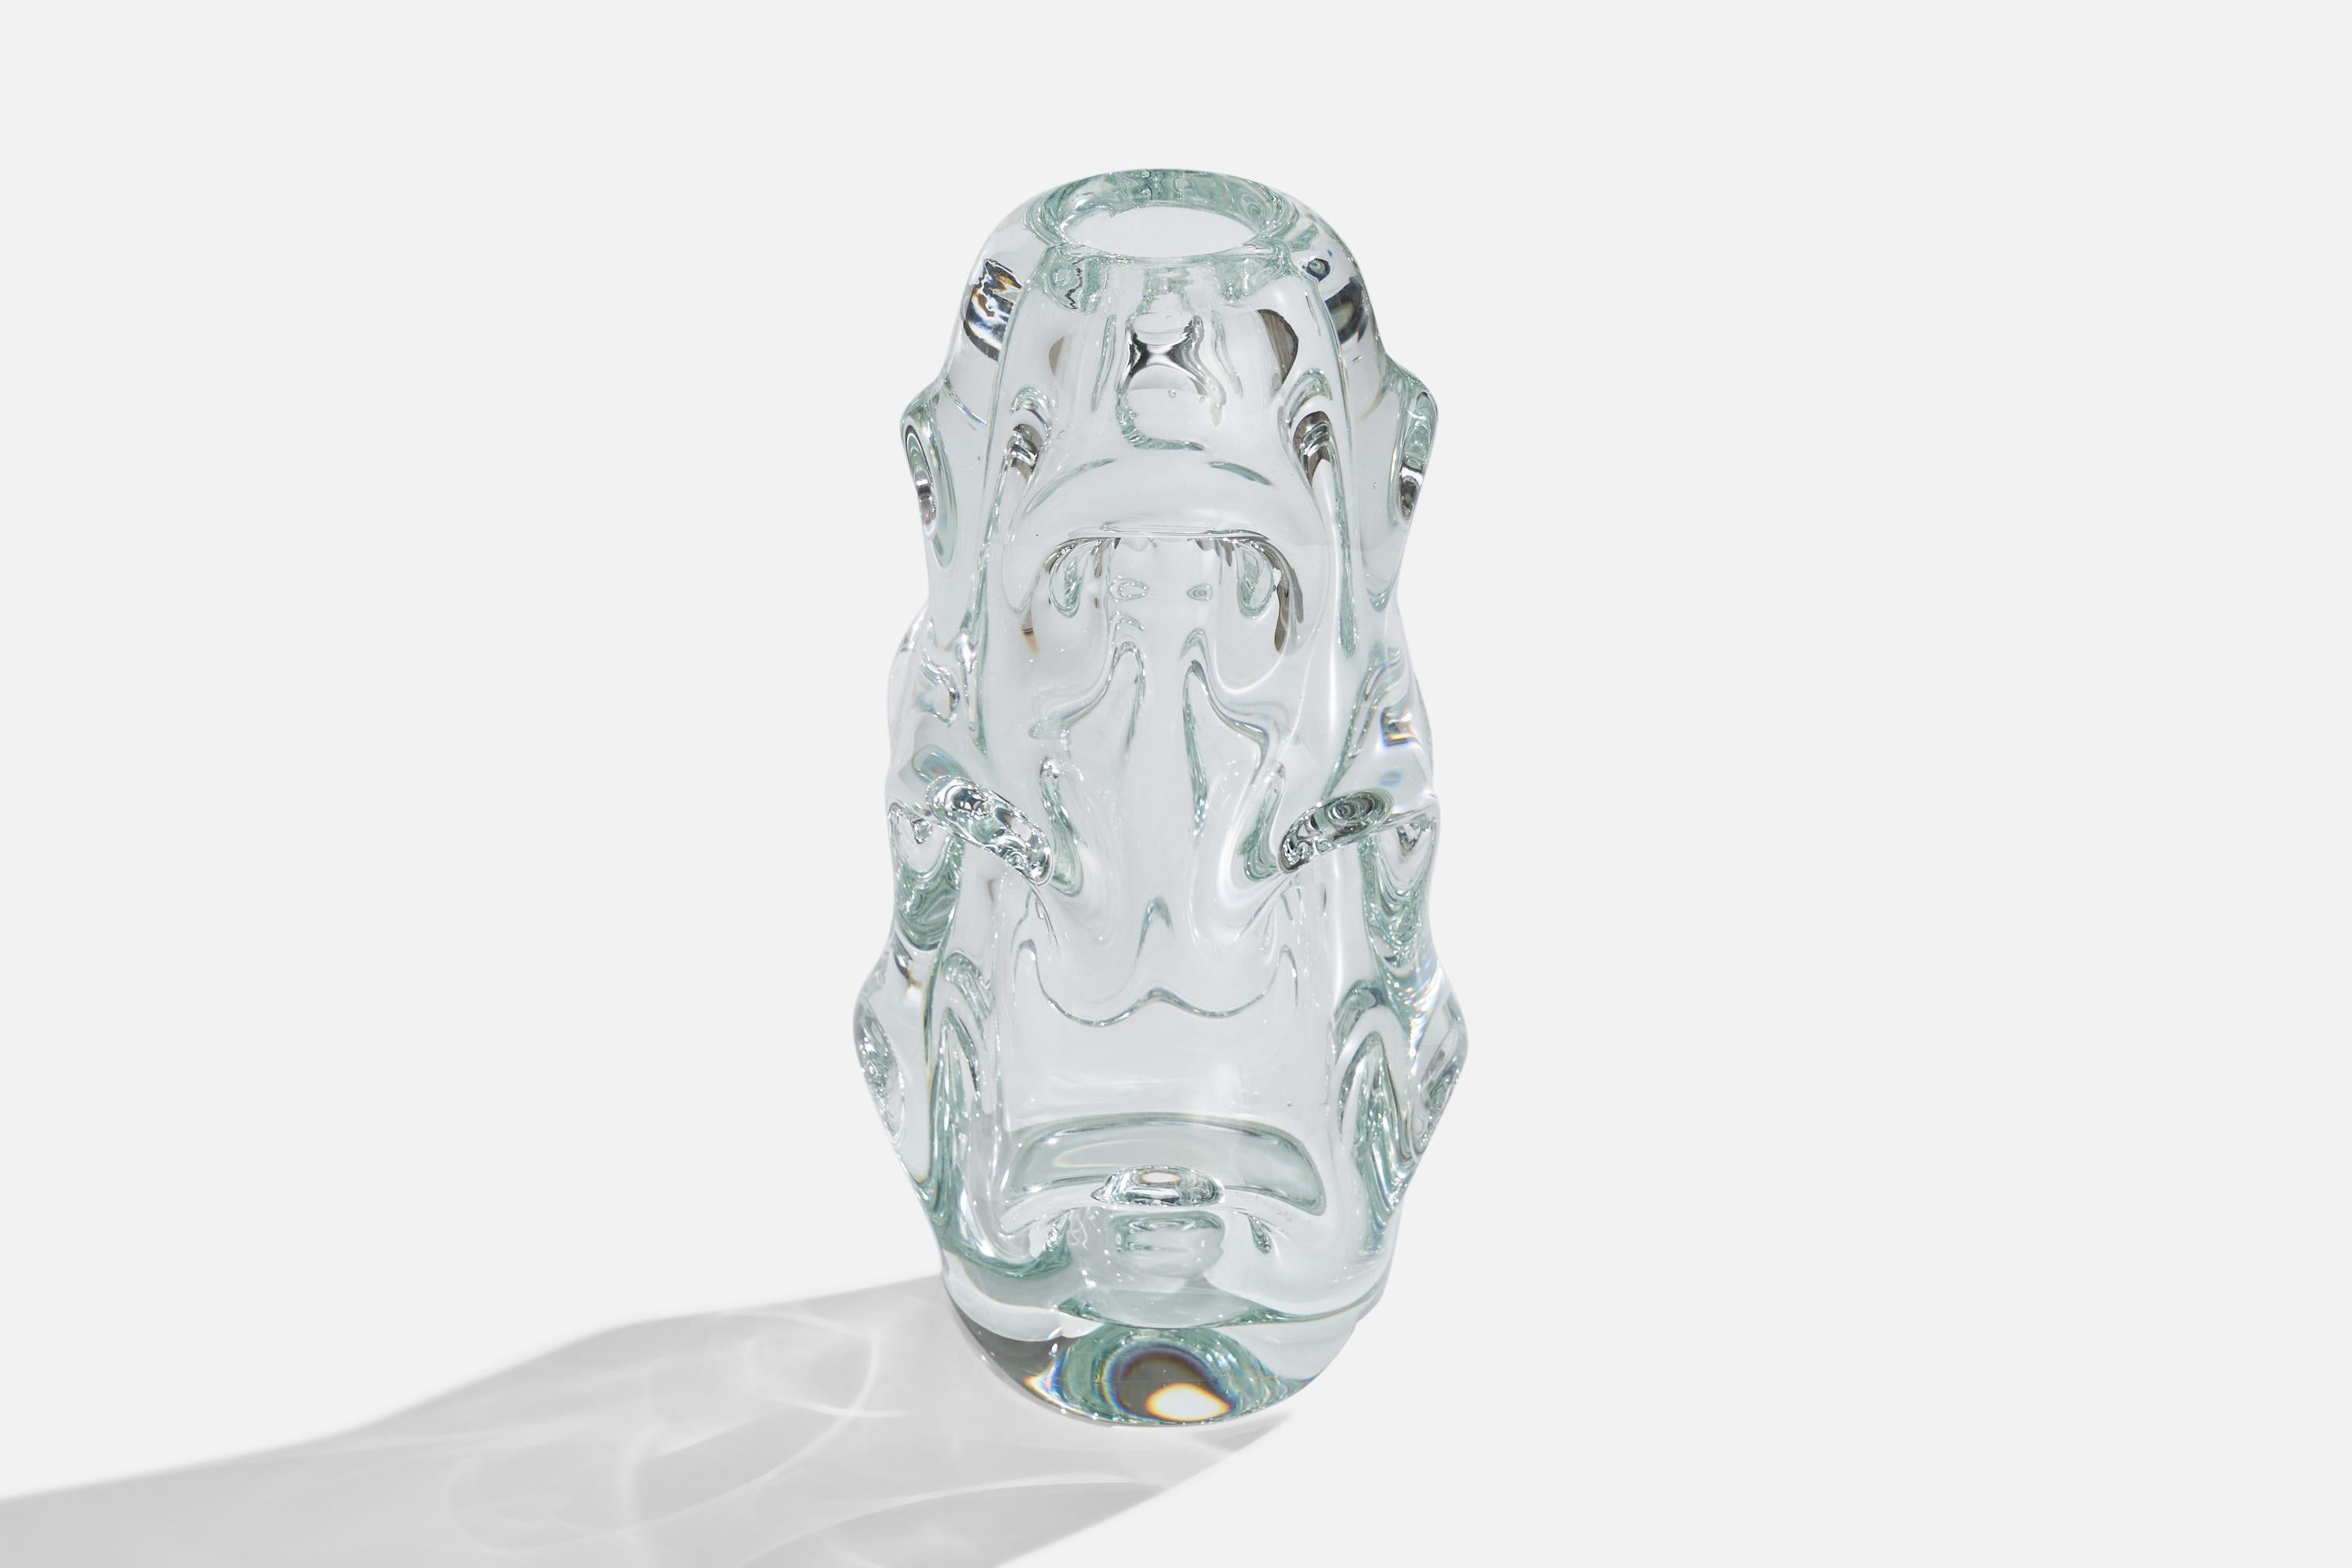 An organic blown glass vase designed by Börne Augustsson and produced by Åseda Glasbruk, Sweden, c. 1940s.